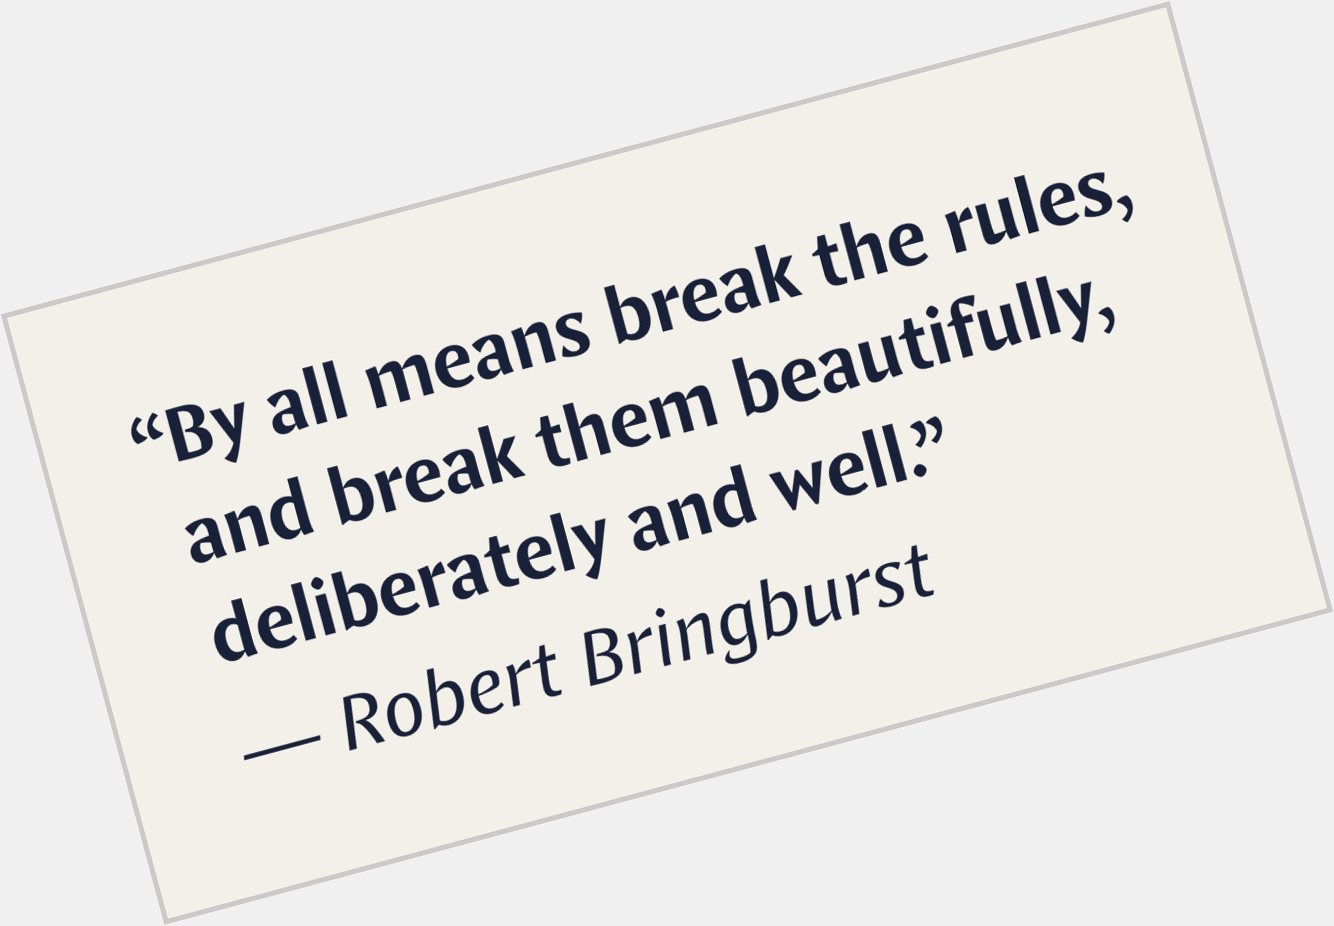 Happy birthday to Robert Bringhurst, poet and author of The Elements of Typographic Style. 